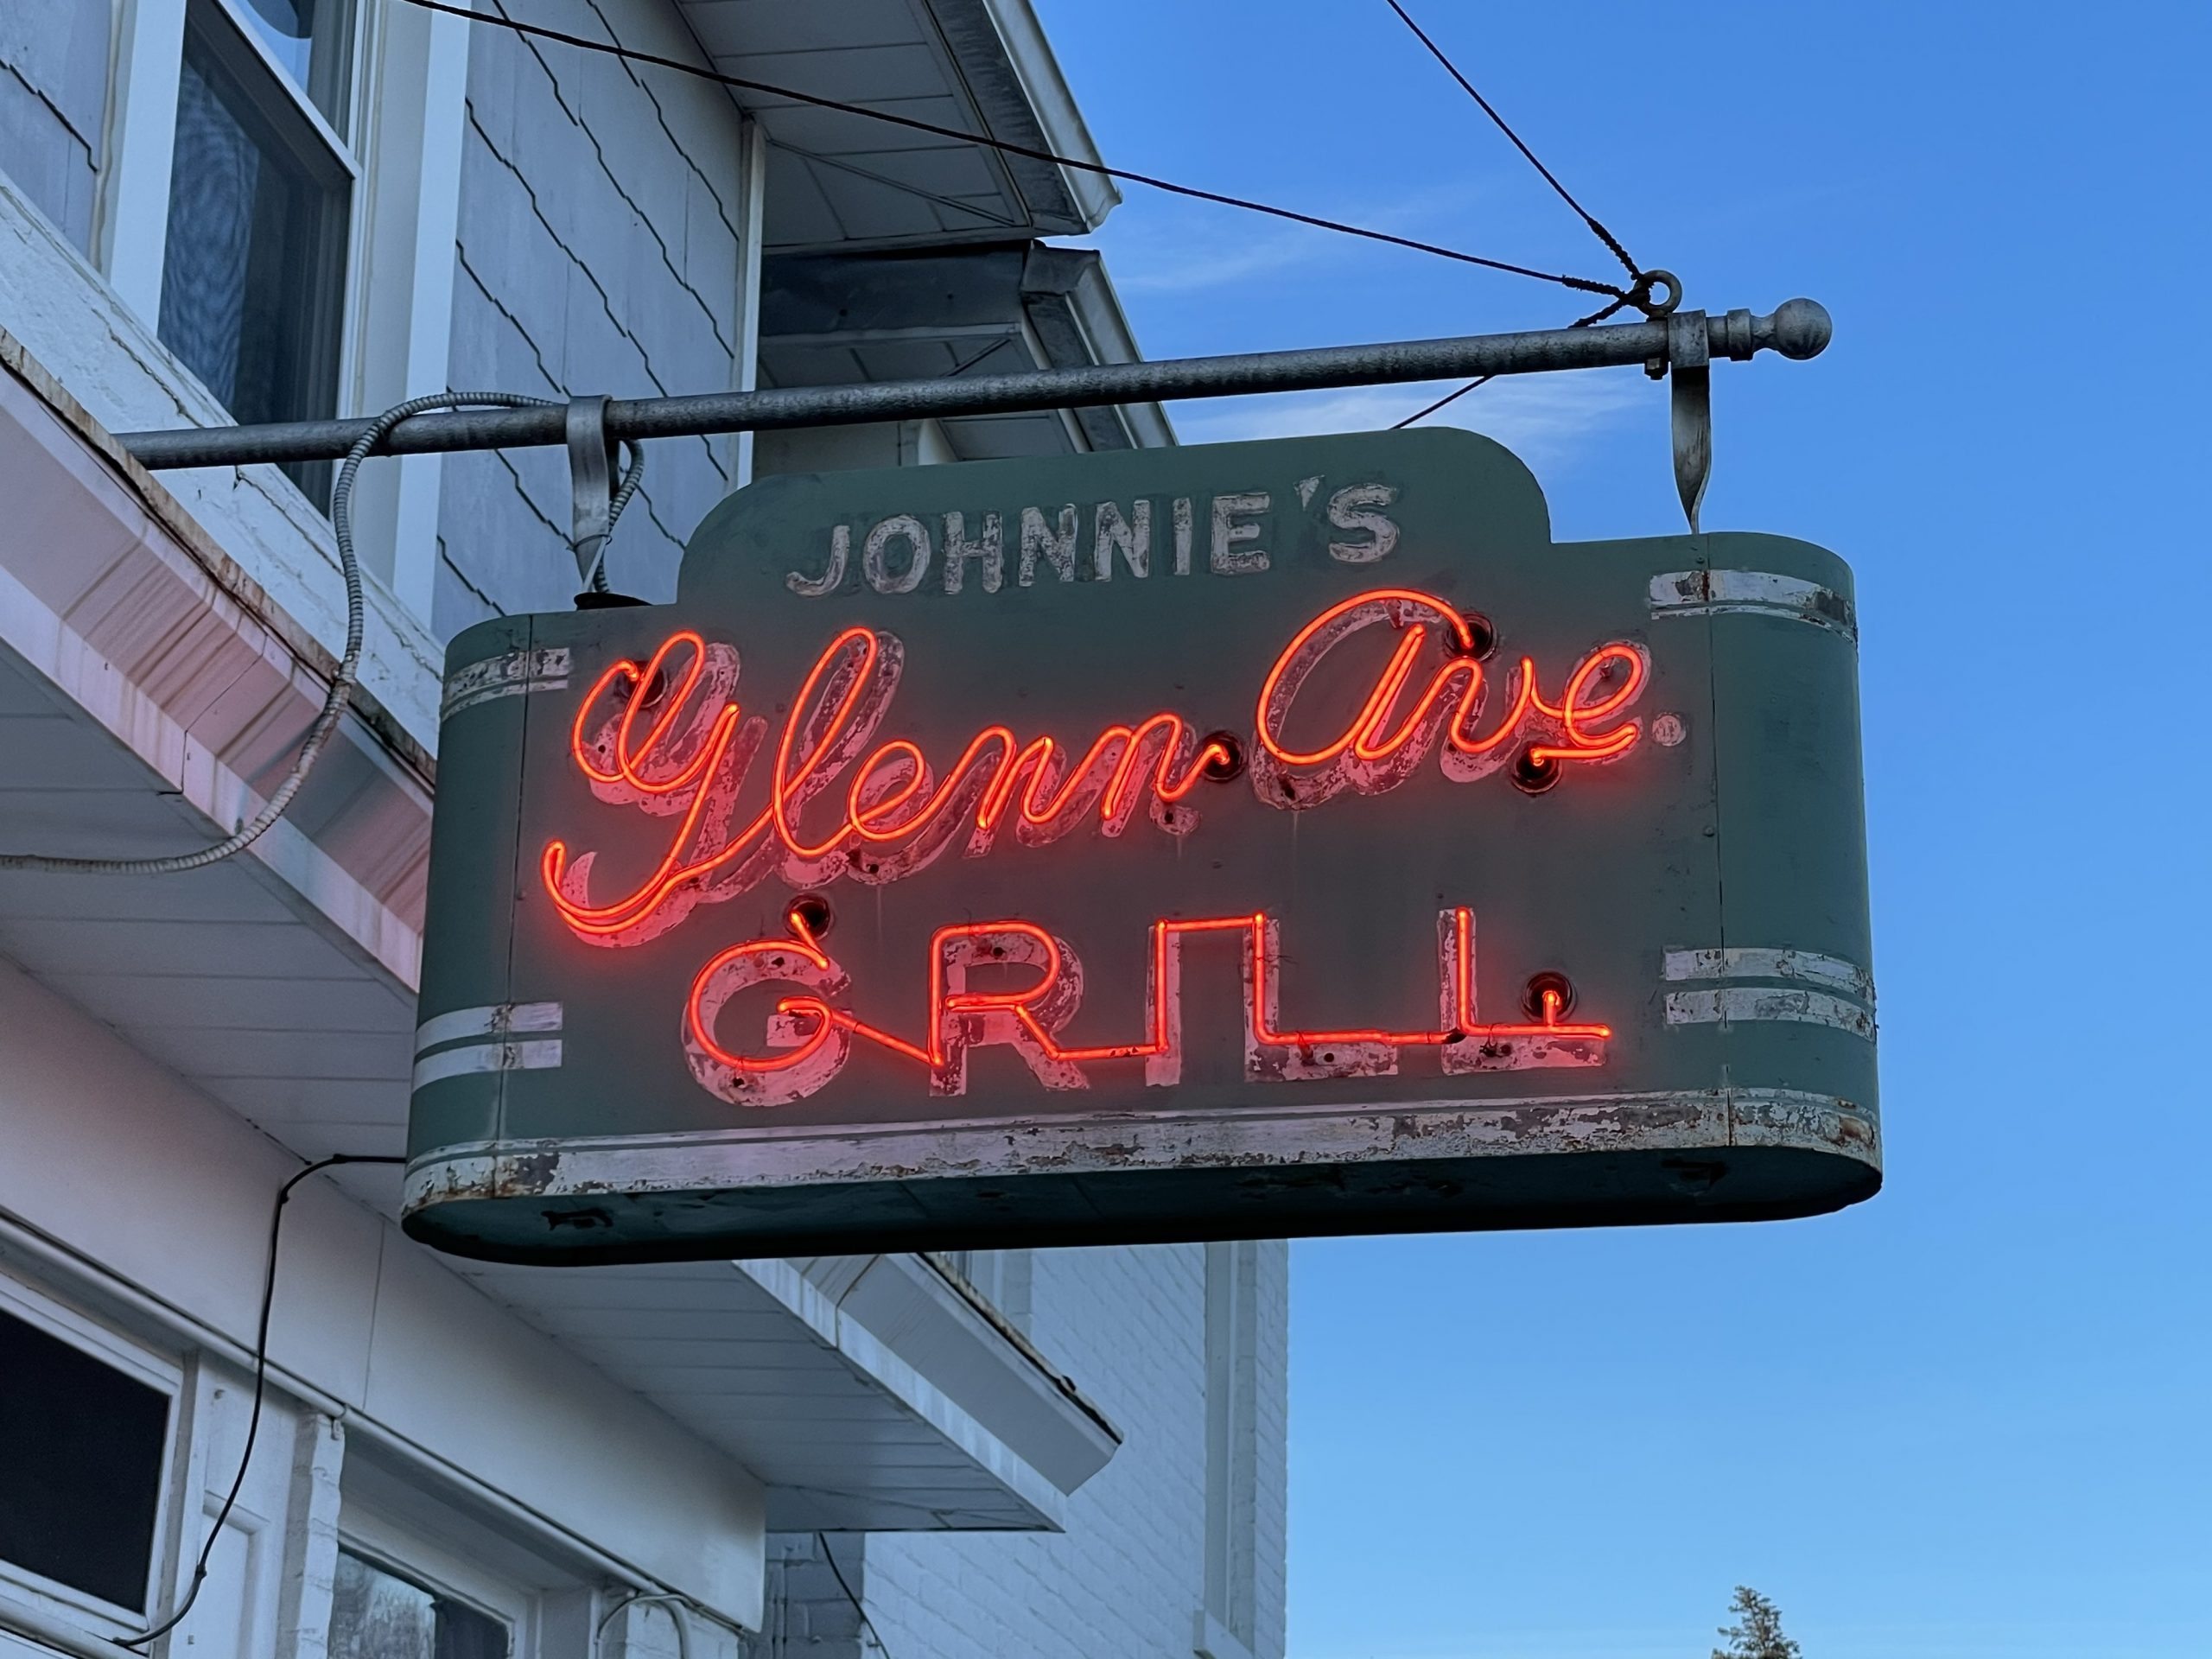 Johnnie's Glenn Avenue Grill - Columbus Dive Bar Exterior Sign